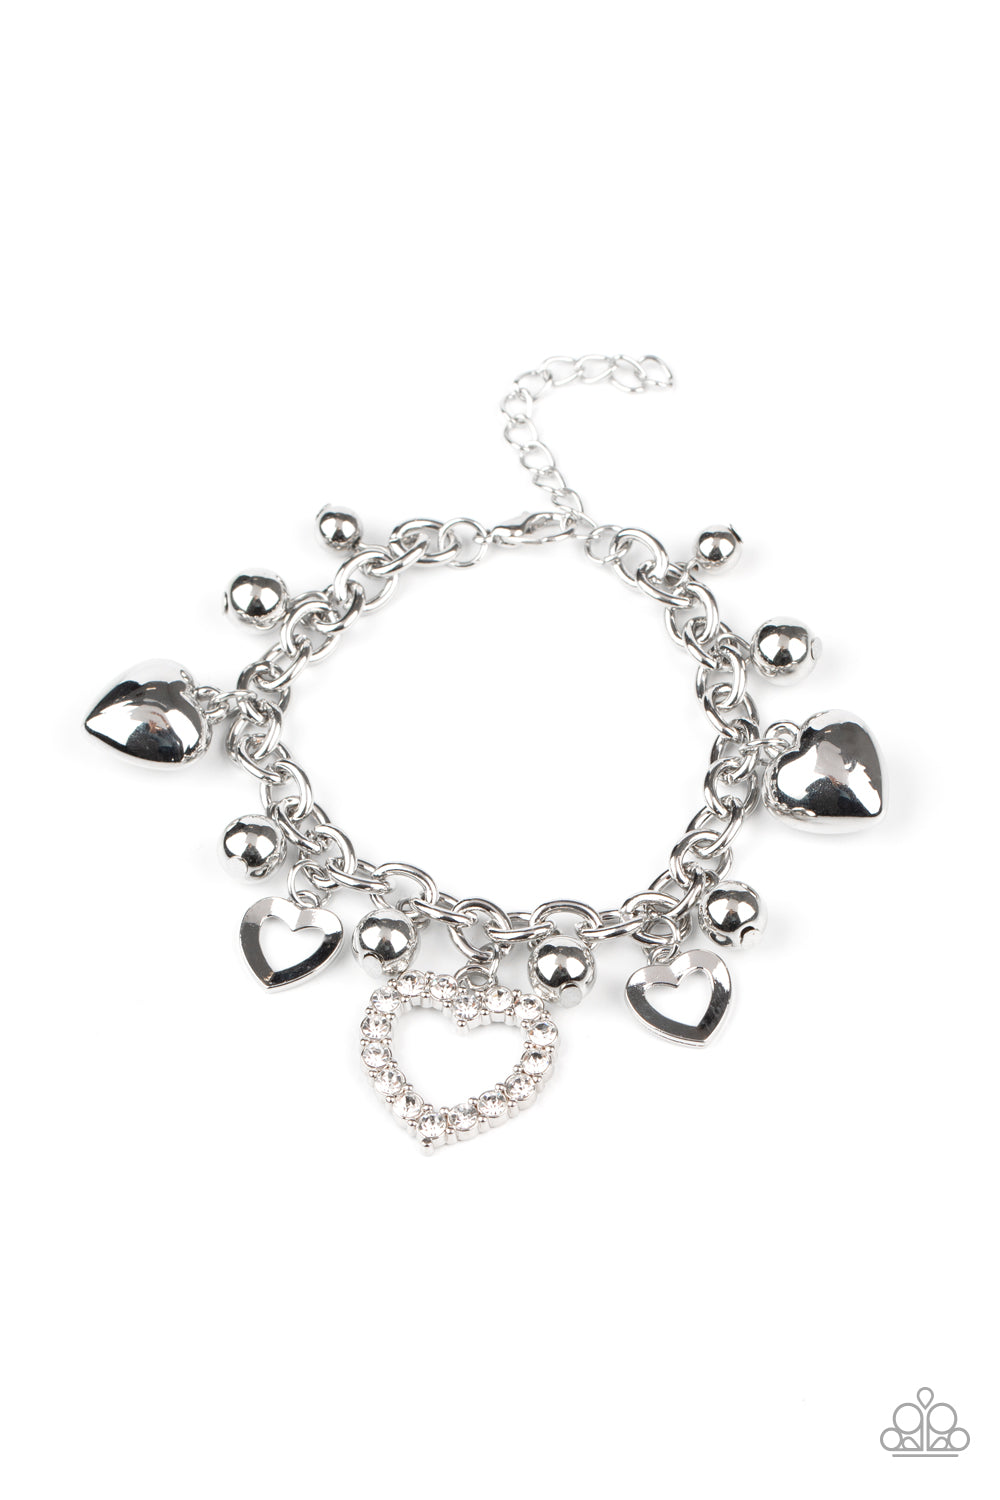 Beautifully Big-Hearted - Paparazzi - White Rhinestone Silver Heart Charm Clasp Bracelet